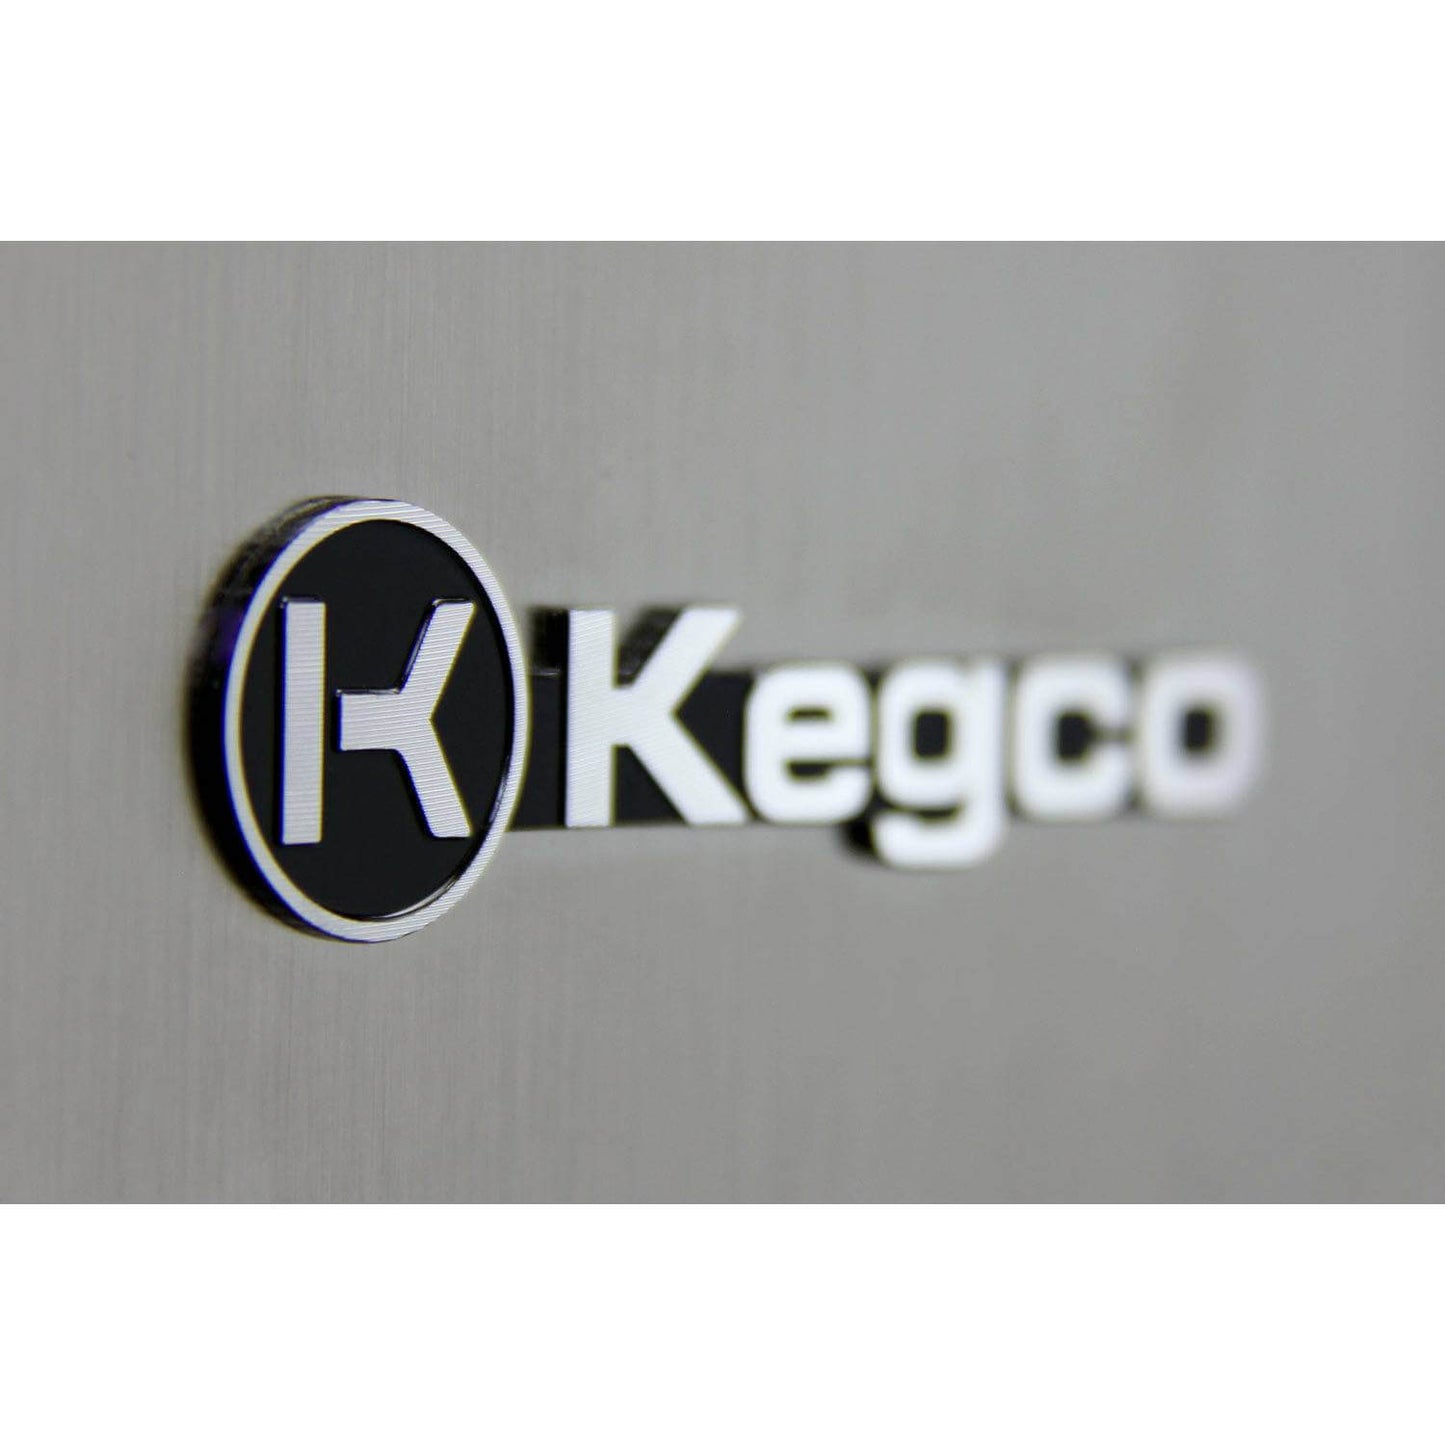 Kegco 15" Wide Single Tap Stainless Steel Built-In Right Hinge Kegerator